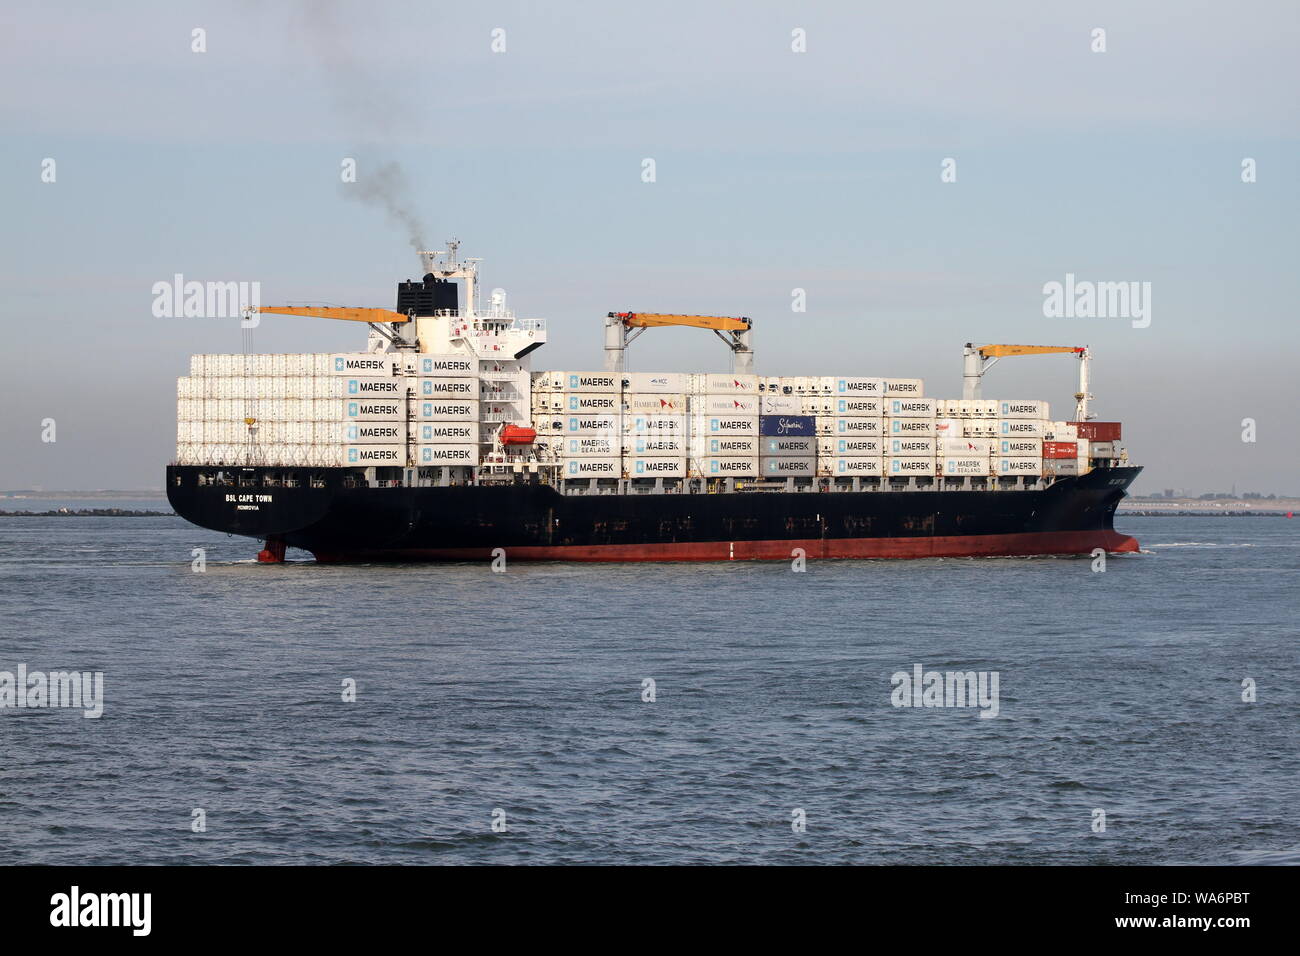 El buque portacontenedores BSL Cape Town llega al puerto de Rotterdam el 22 de mayo de 2019. Foto de stock